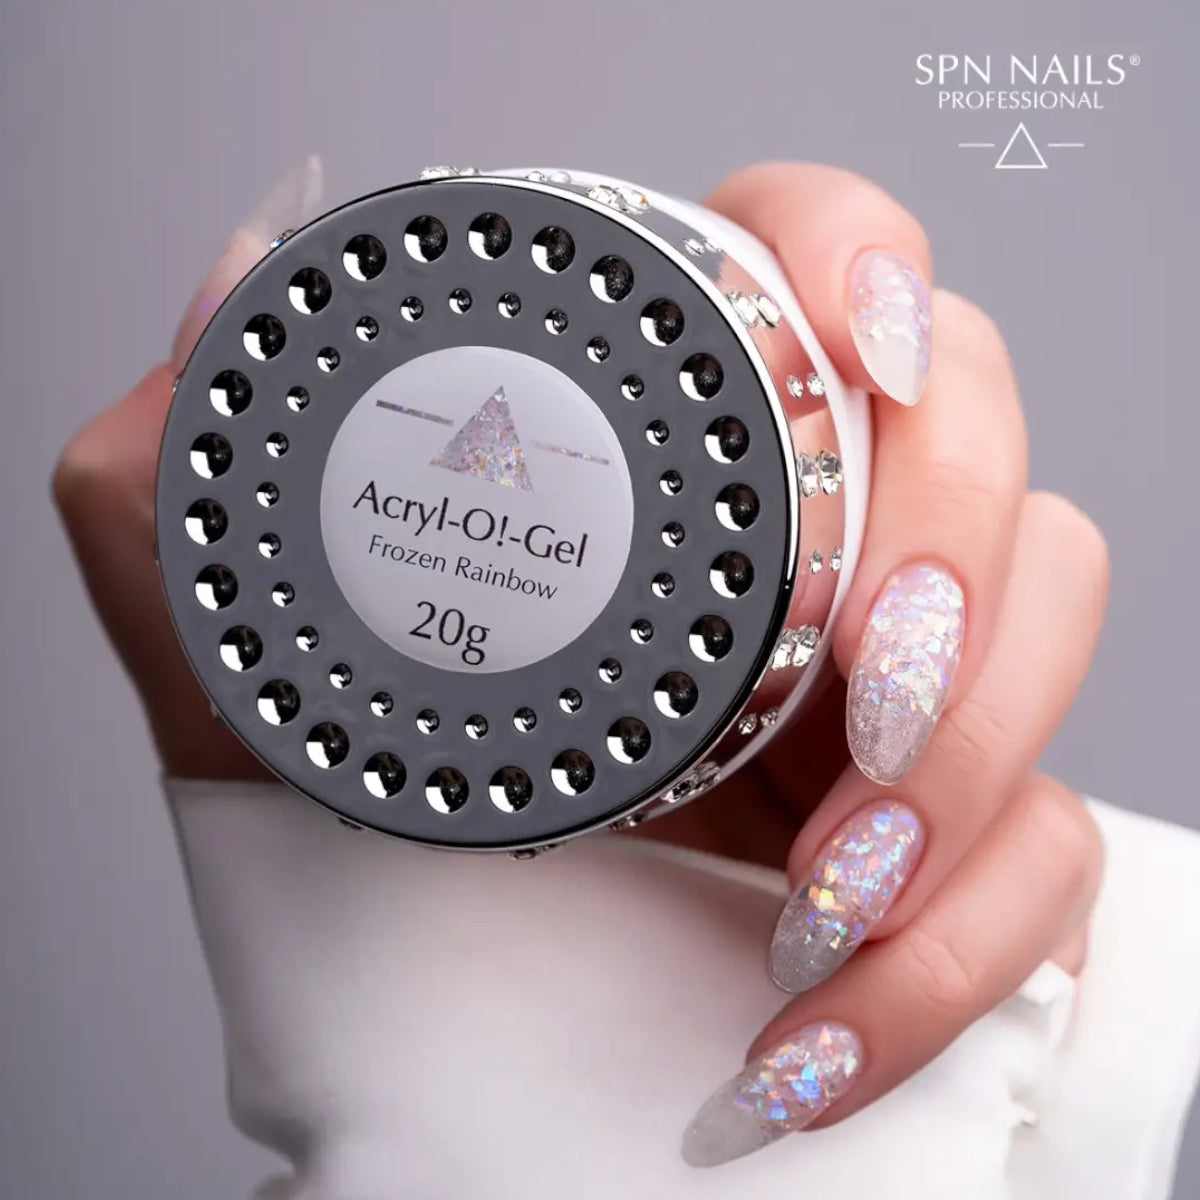 SPN Nails Acryl-O!-Gel Acrylic Gel Frozen Rainbow Glitter Nails